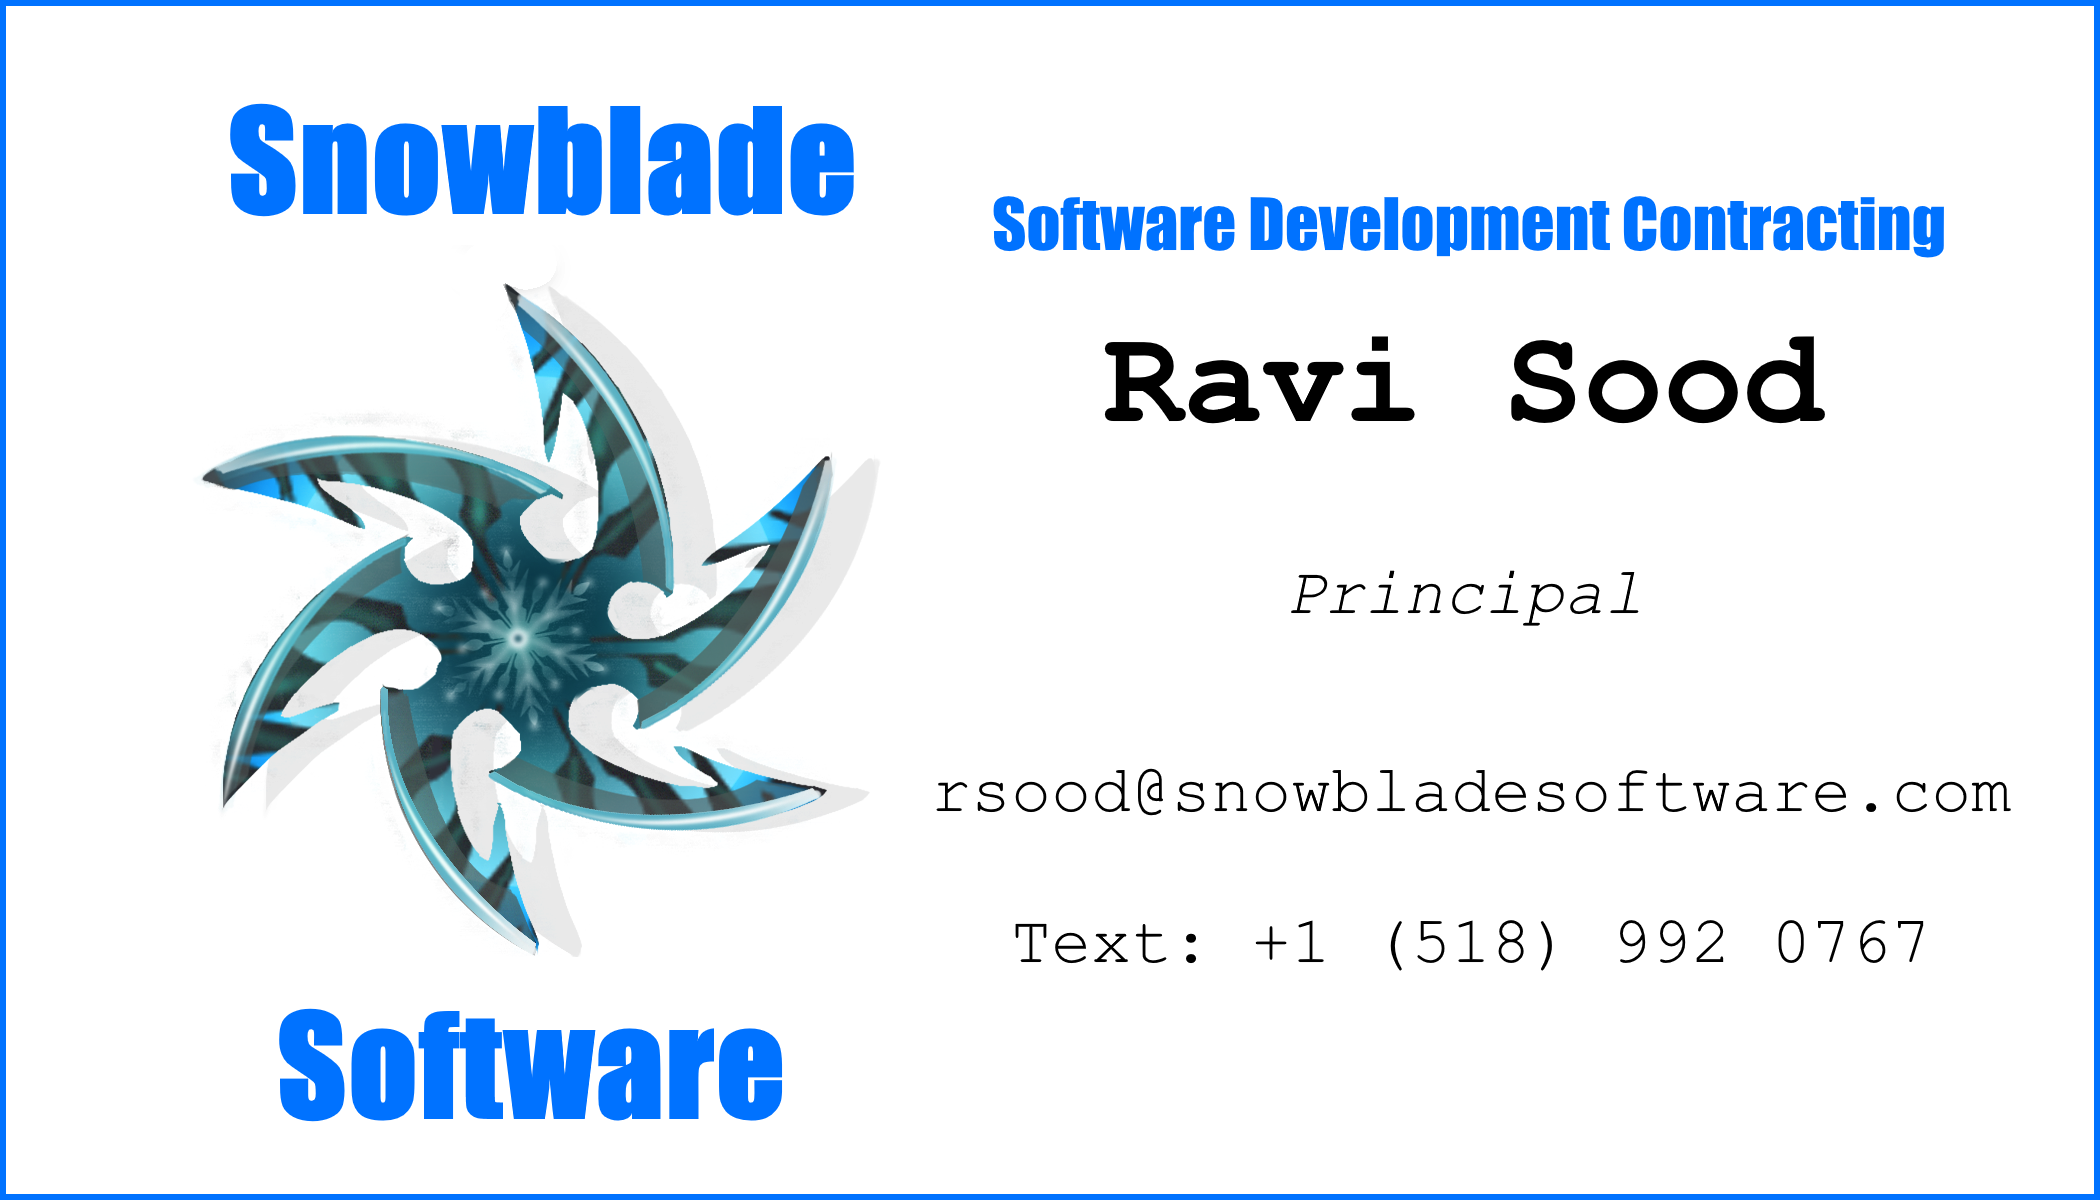 Business Card
Snowblade Software - Software Development Contracting
Text: +1 518 992 0767